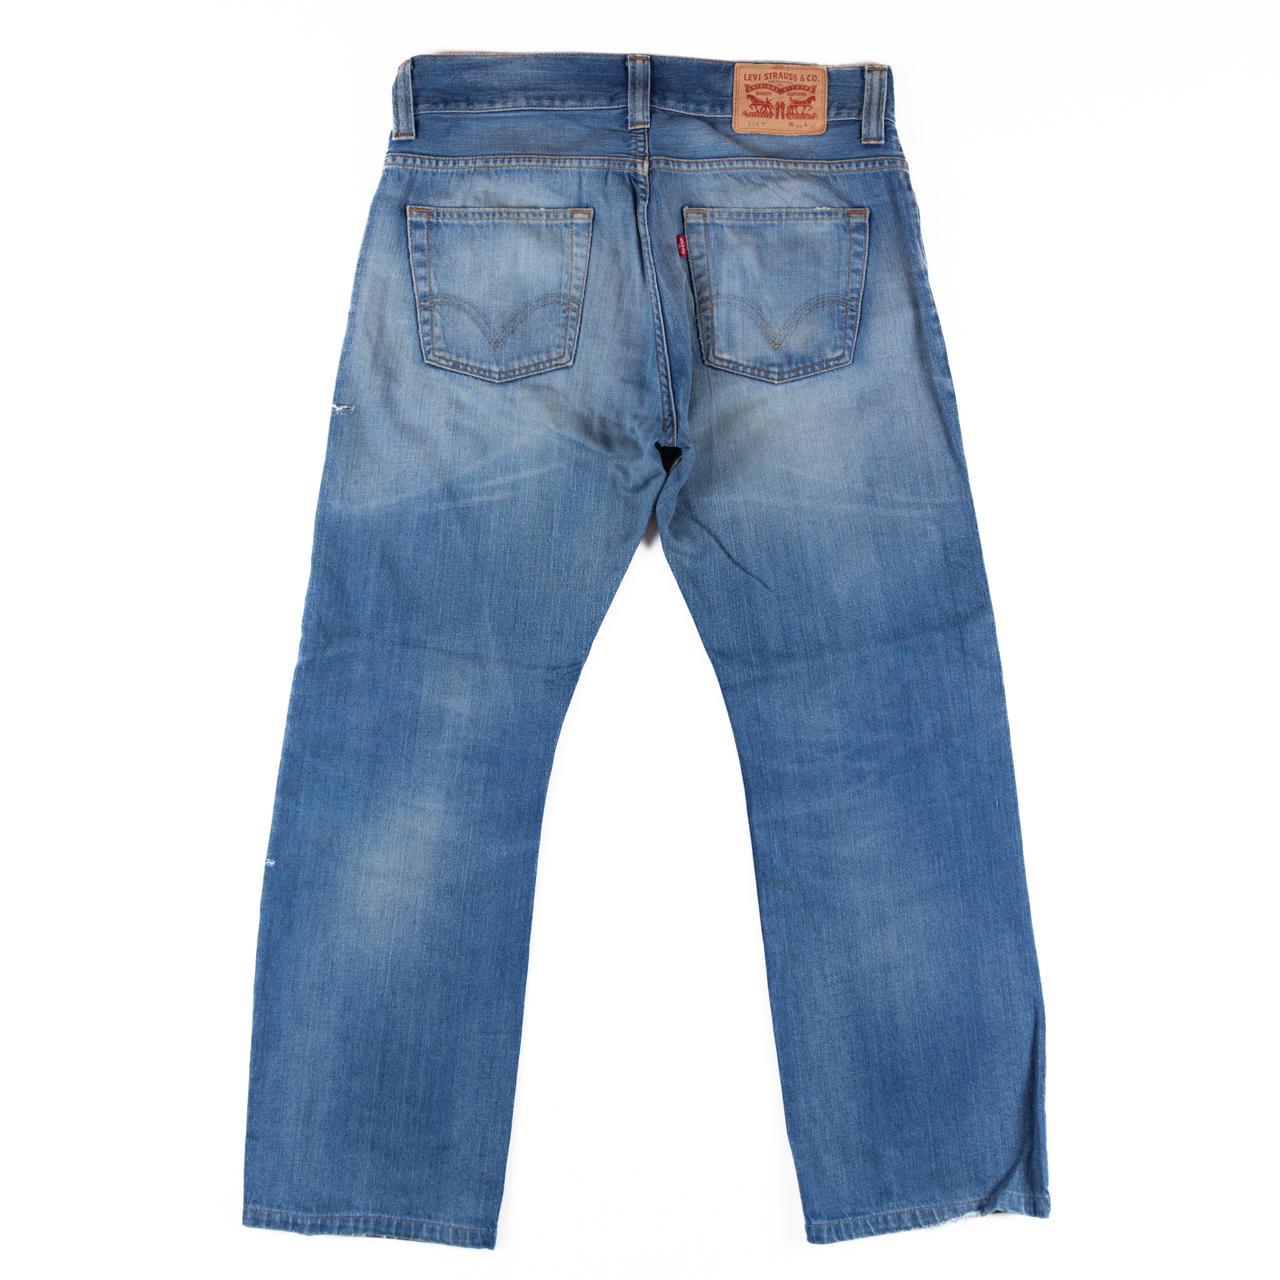 Levi’s 506 Blue Denim Jeans Mens 34W” 28L” Straight... - Depop